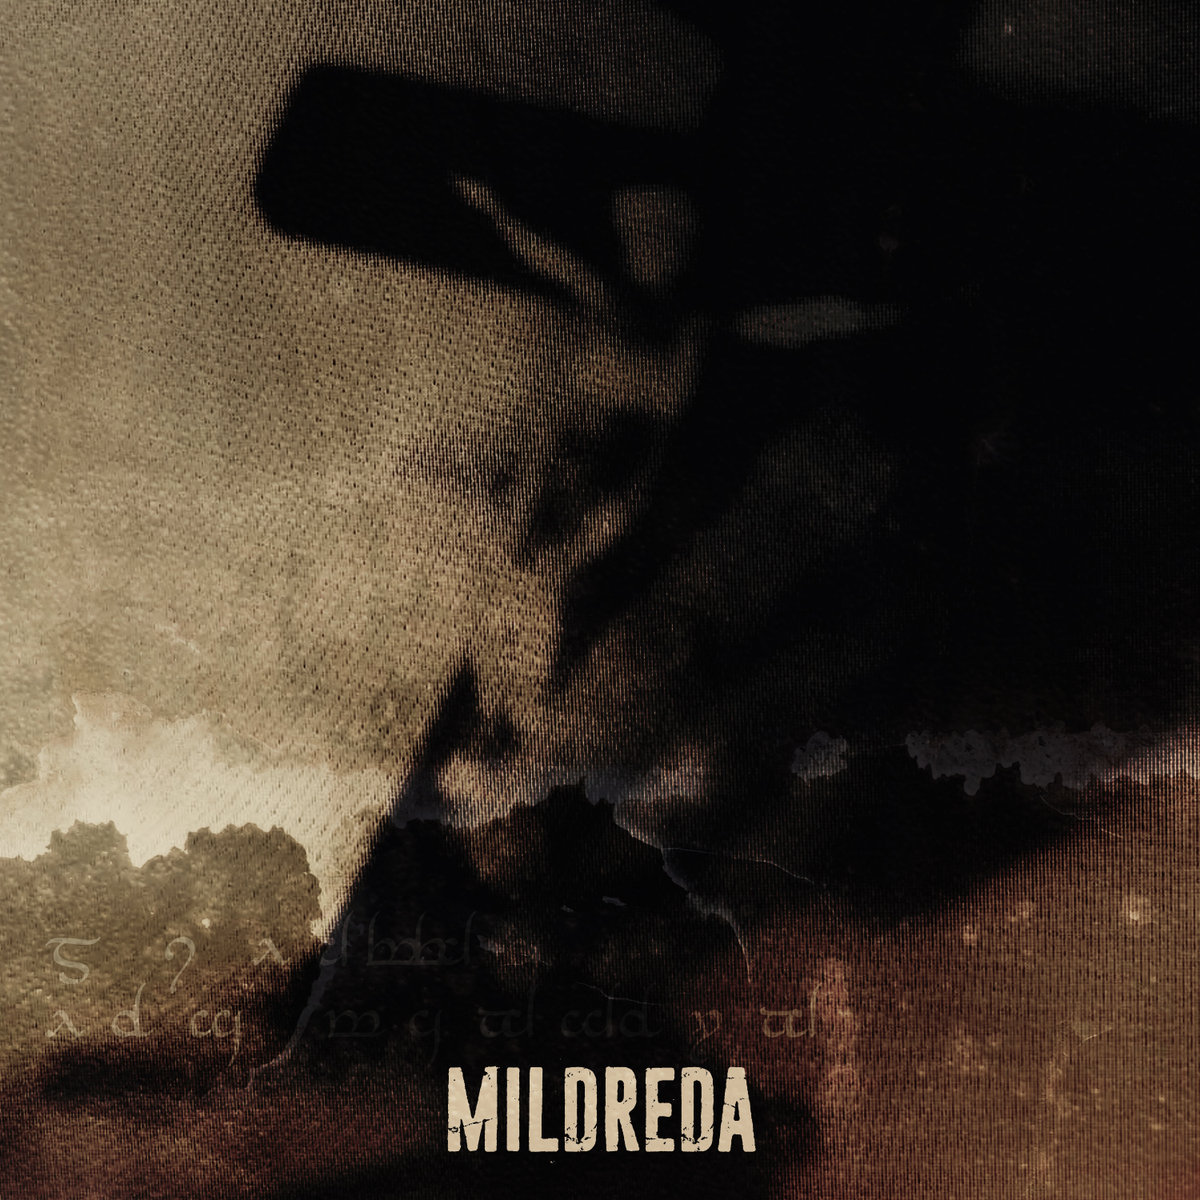 Mildreda - Coward Philosophy (2016) Album Info